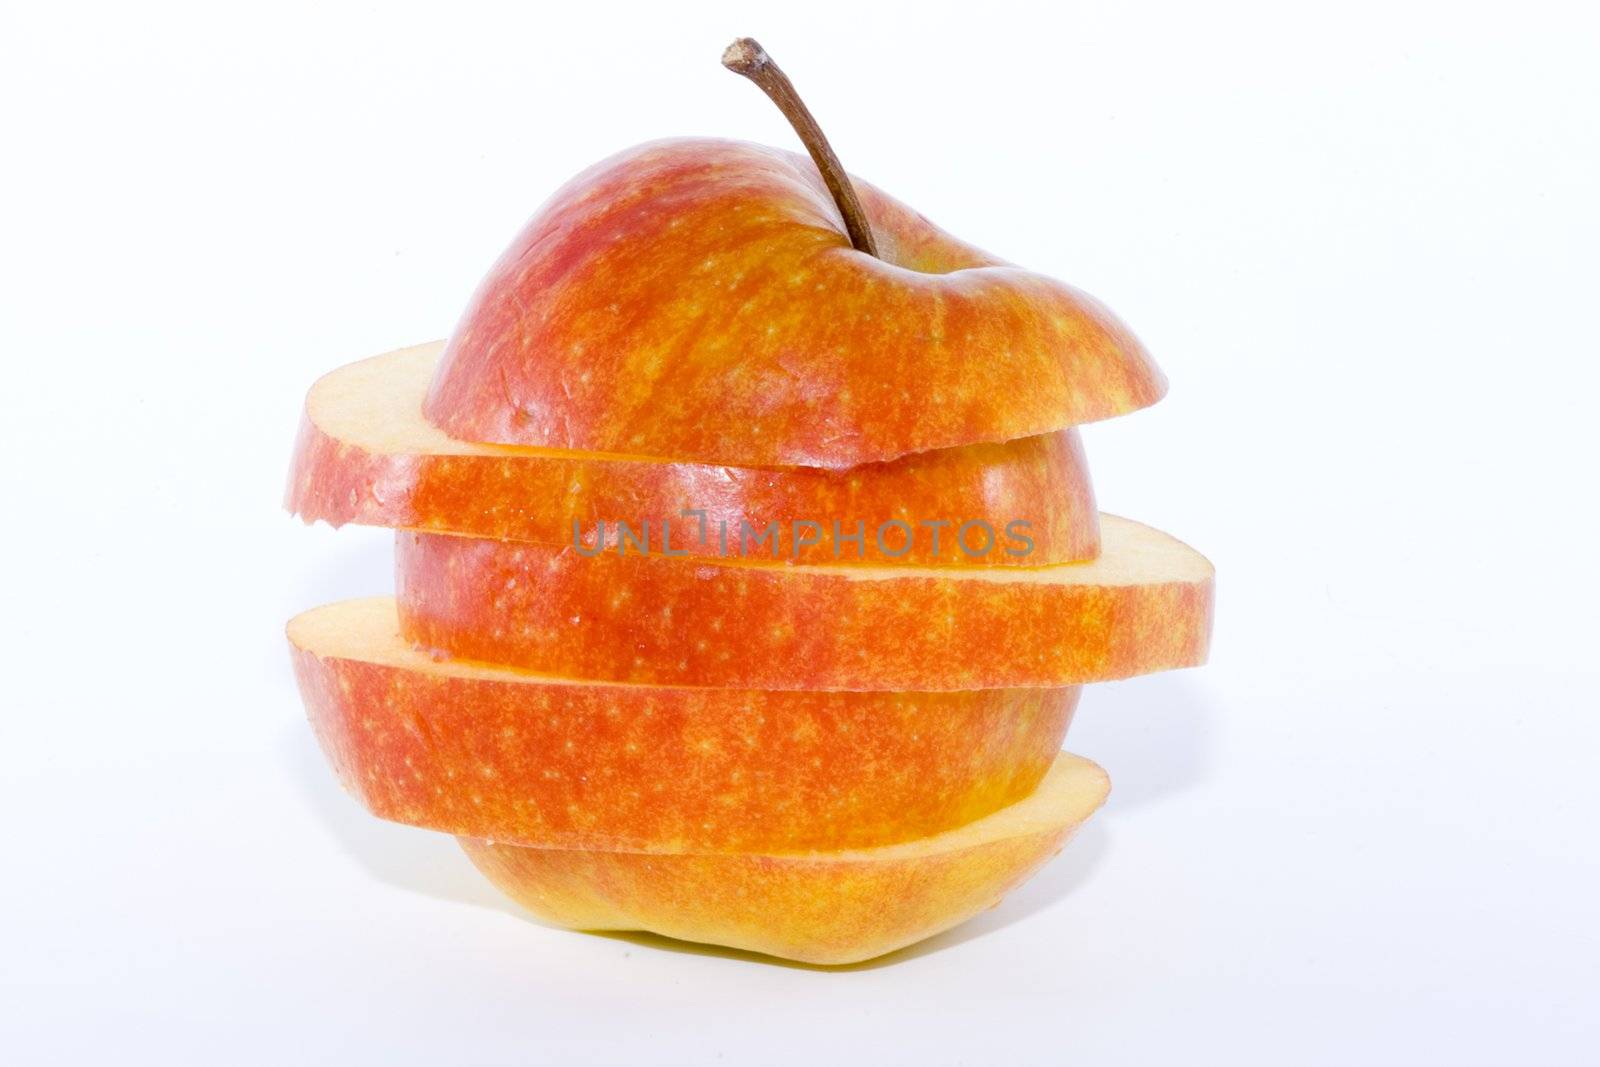 Sliced Apple by werg